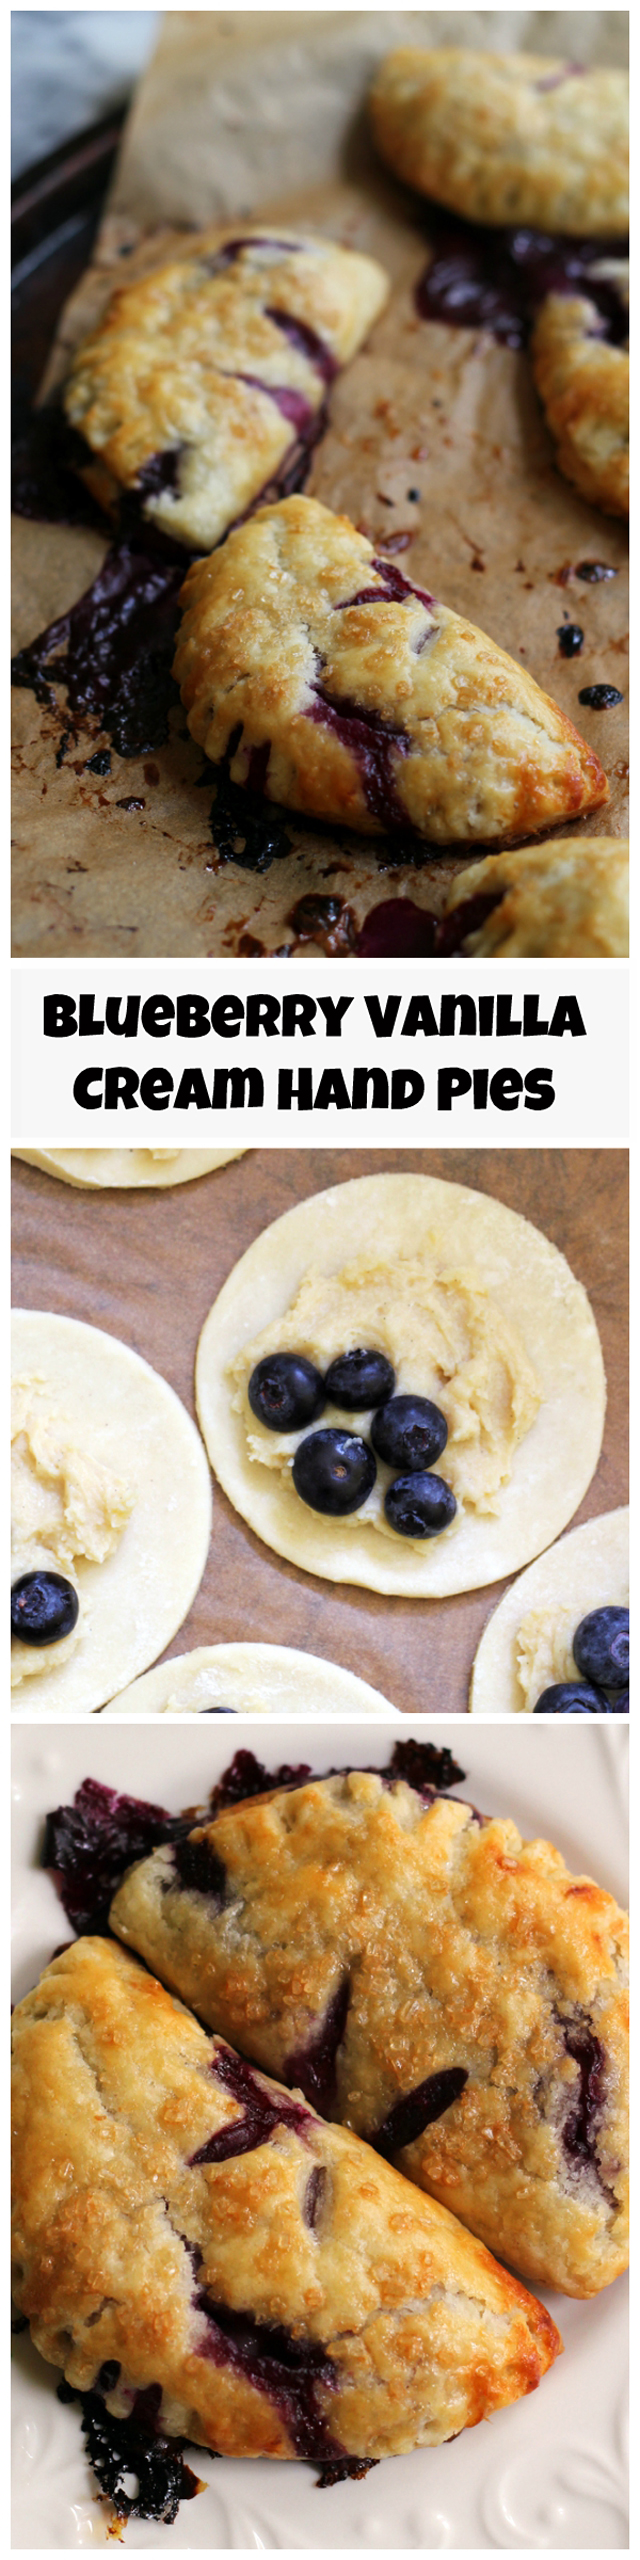 Blueberry Vanilla Cream Hand Pies